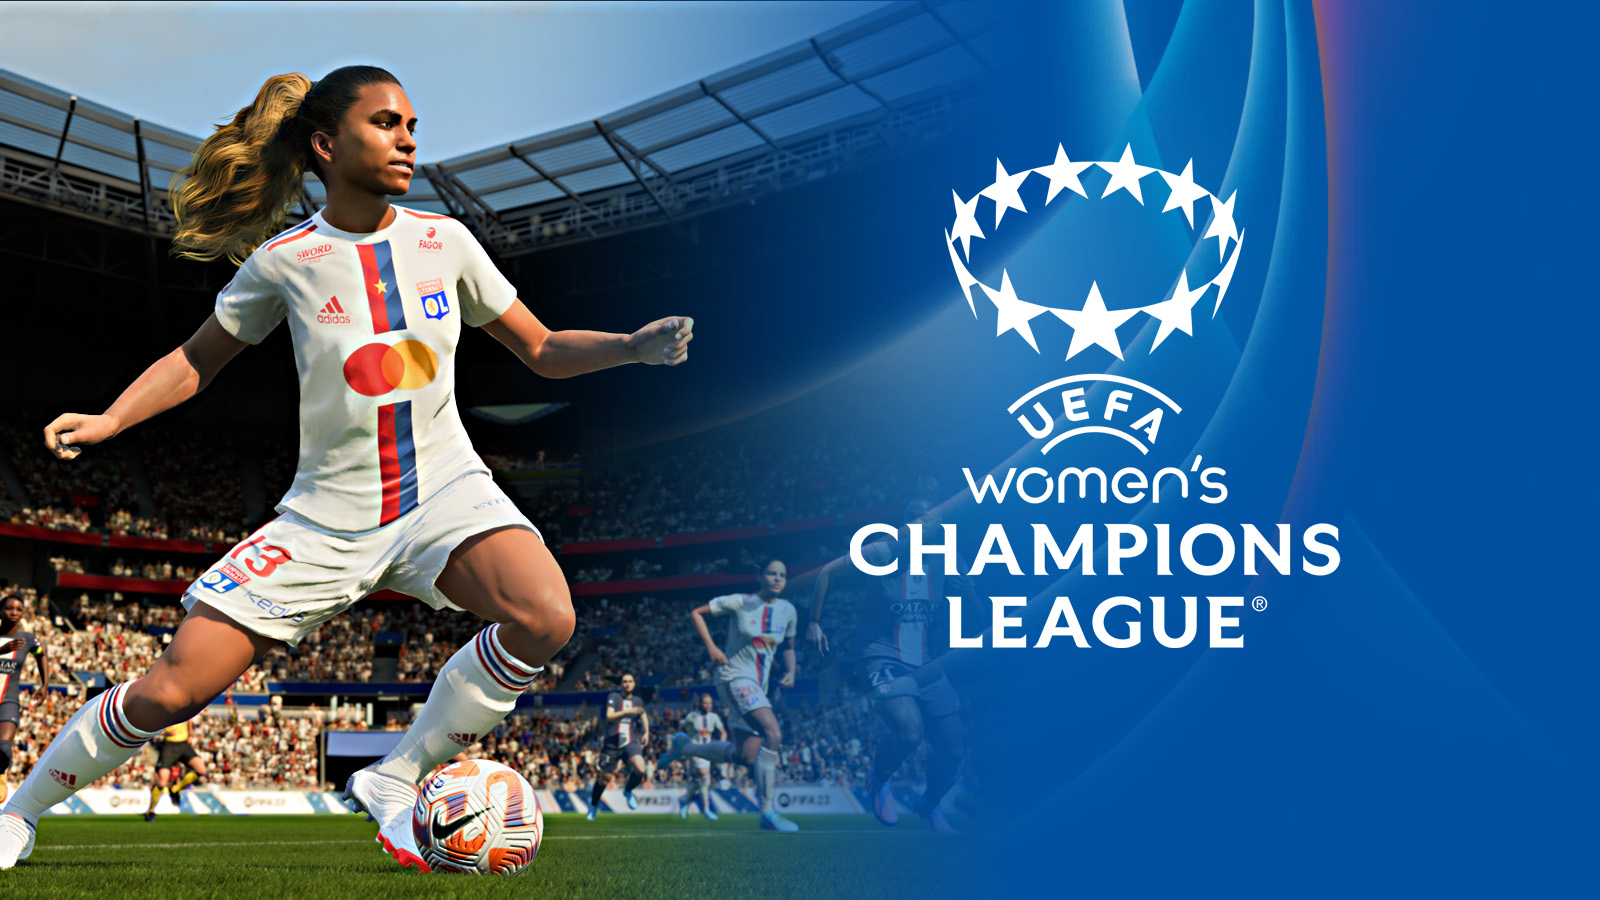 FIFA 23: UEFA Women's Champions League chega ao jogo